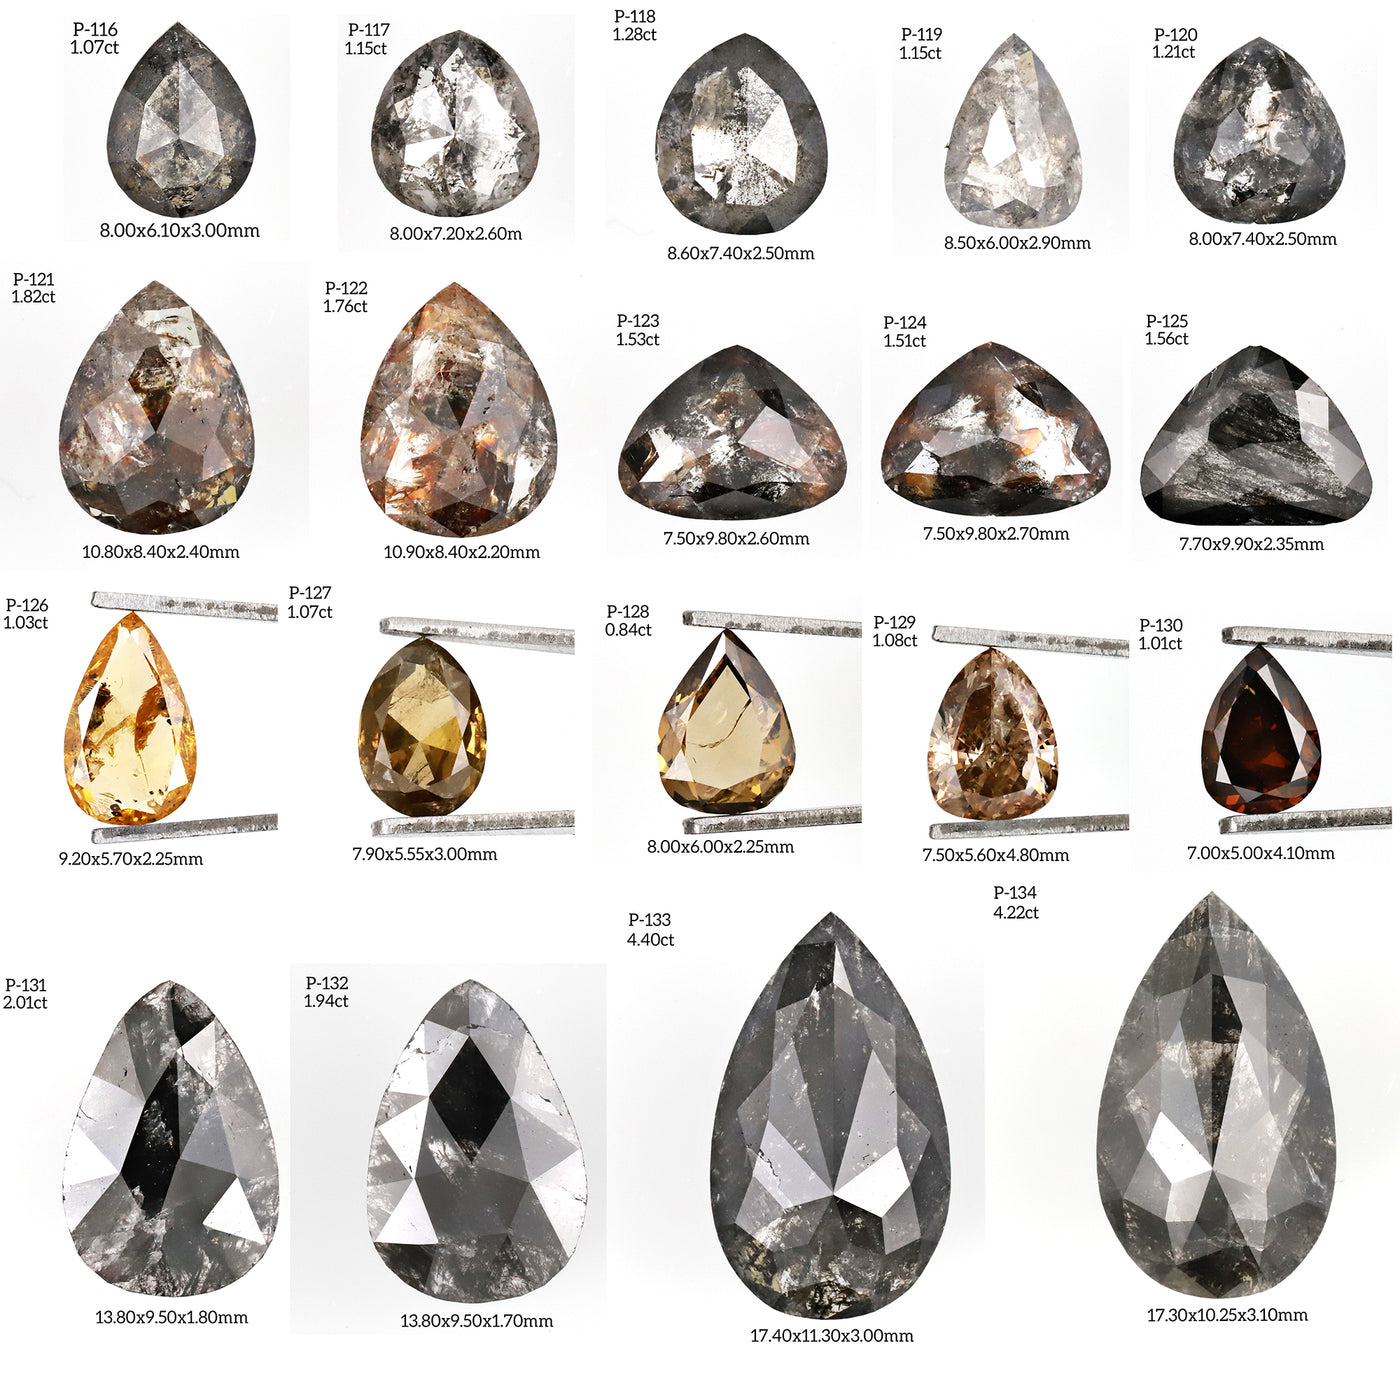 P126 - Salt and pepper pear diamond